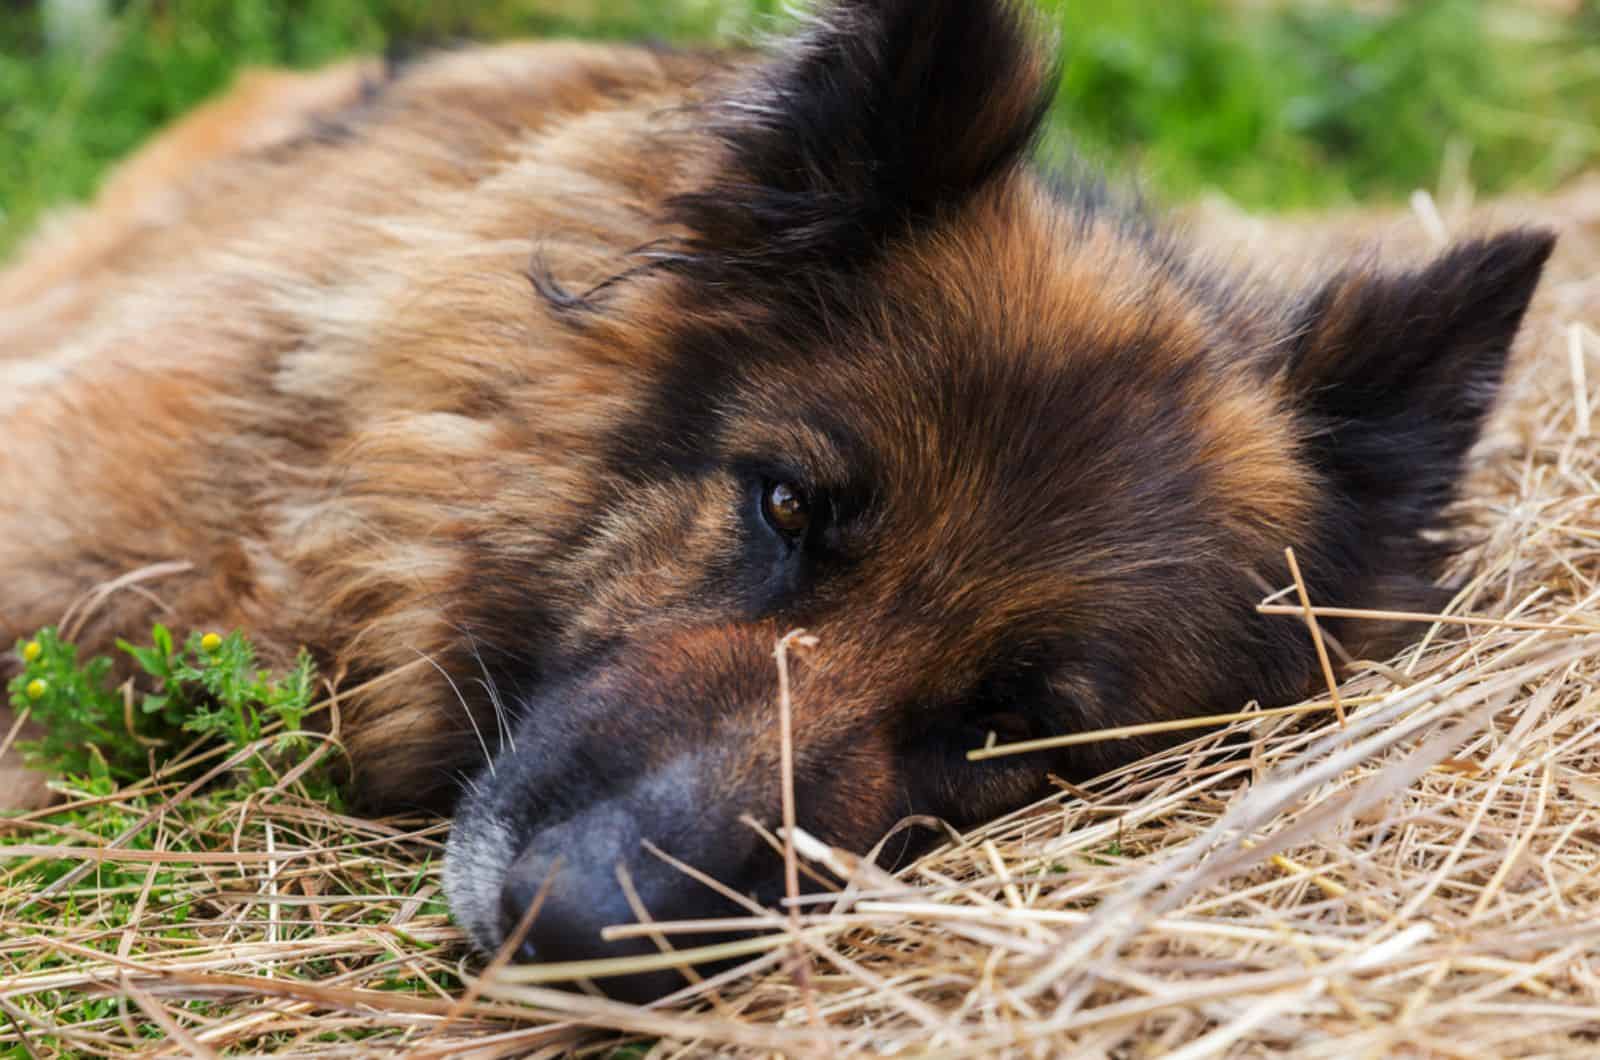 german shepherd dog sleeping with his eyes open in the hay